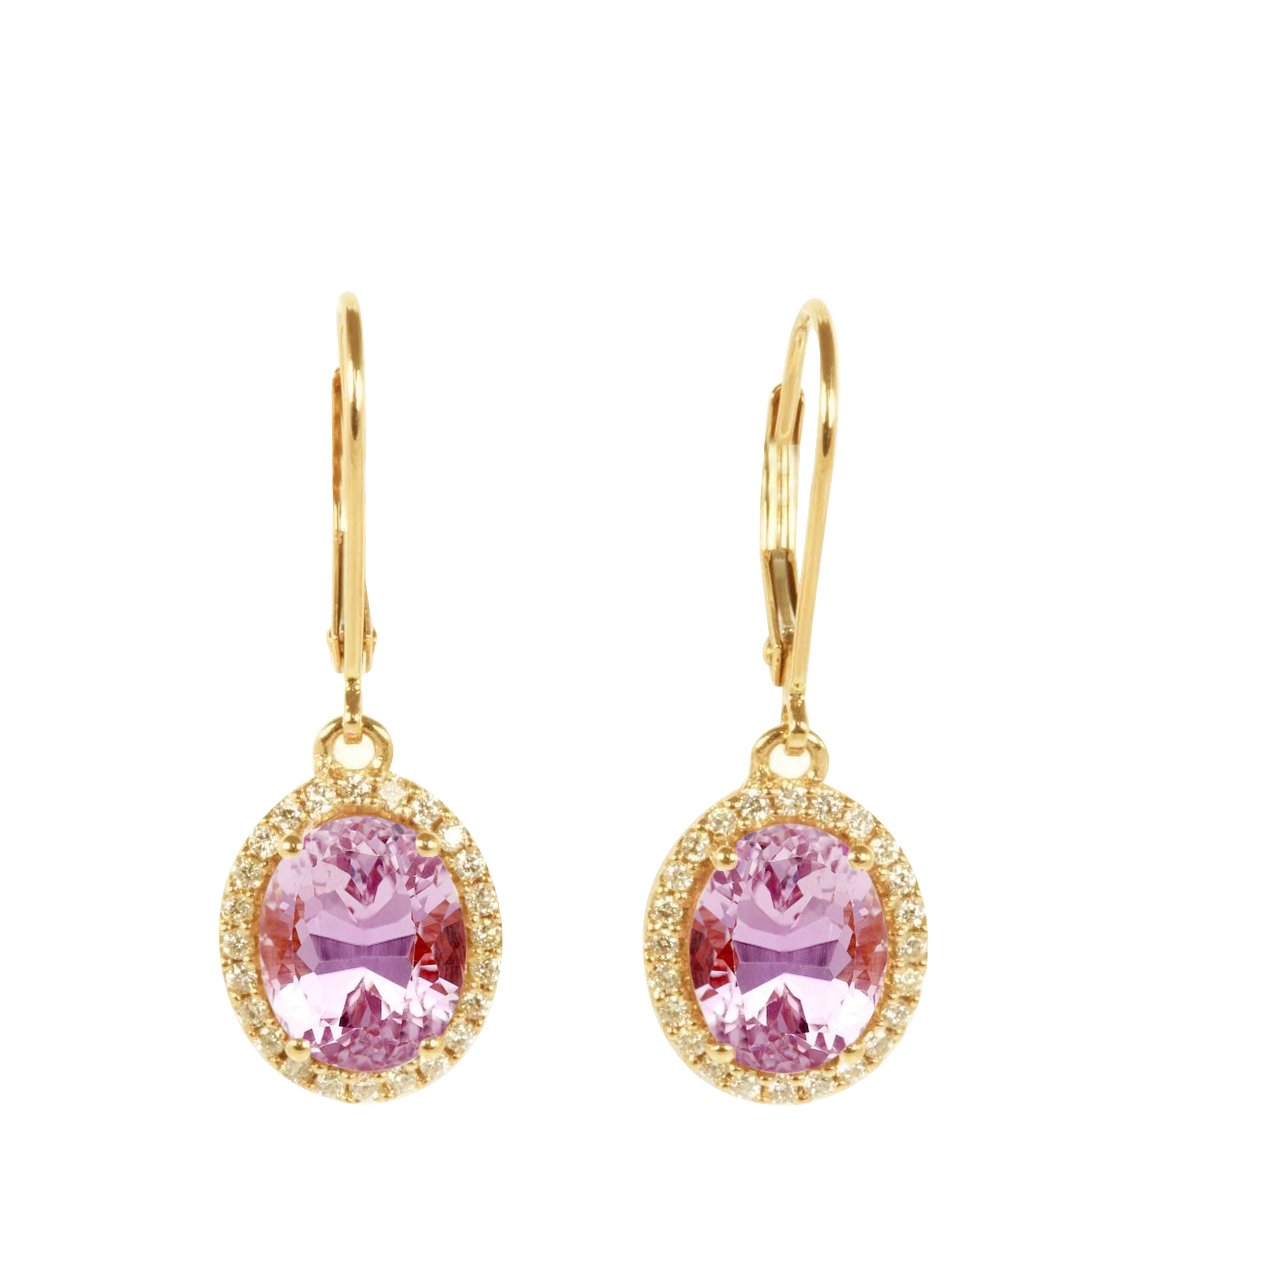 9 ct. Kunzite rosa ovale con diamanti pendenti in oro giallo 14K - harrychadent.it